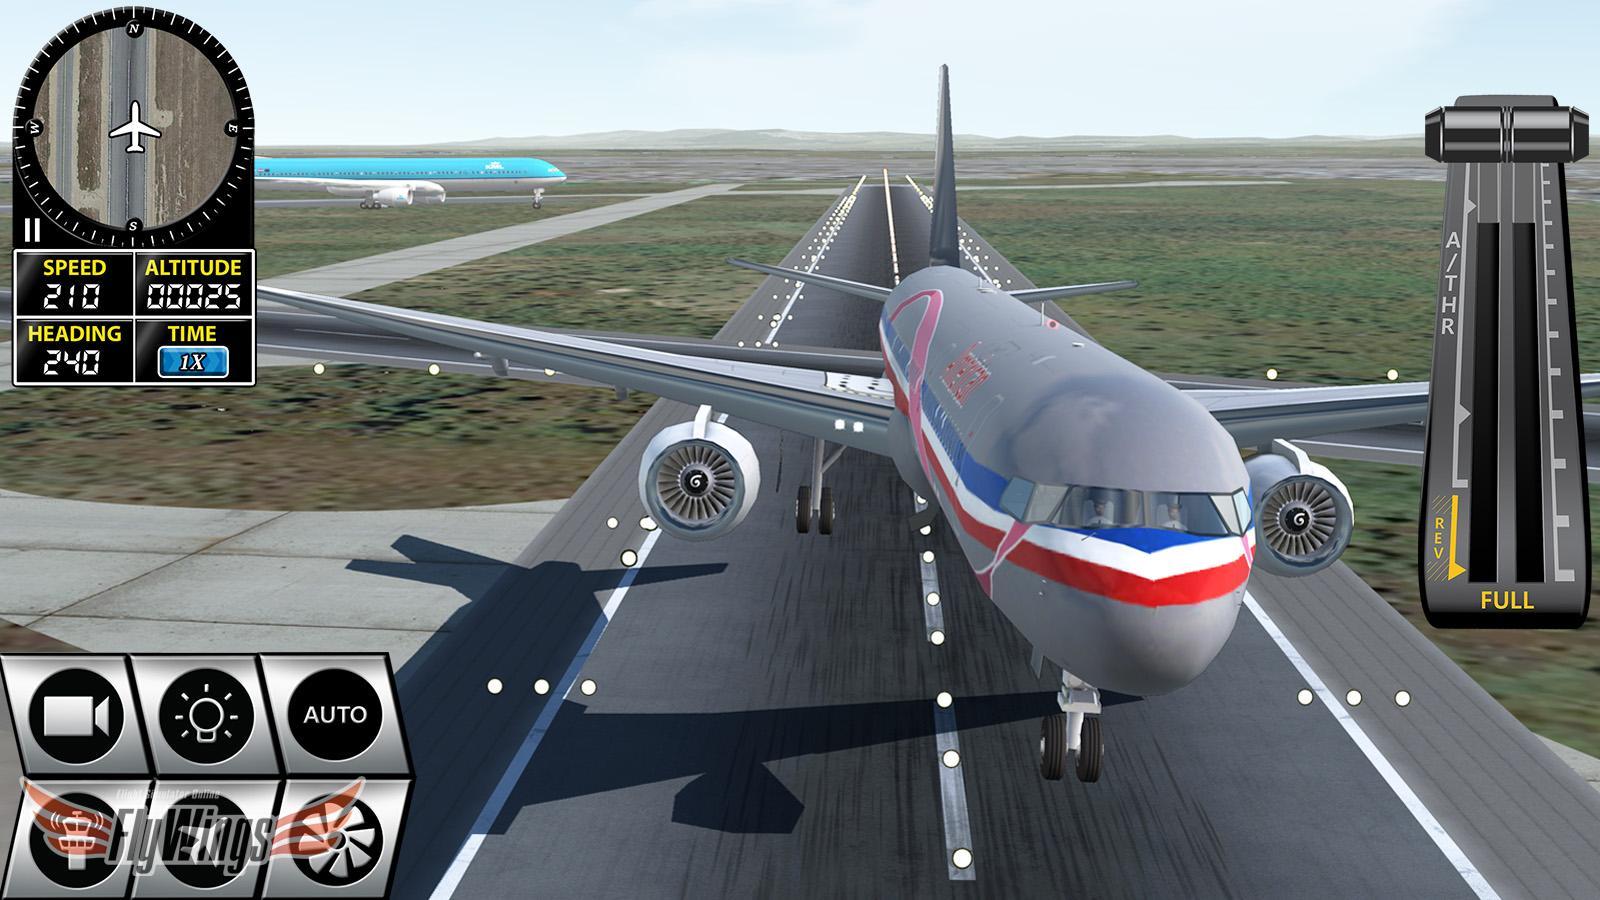 Flight Simulator 2016 Flywings For Android Apk Download - 2016 flight simulator roblox